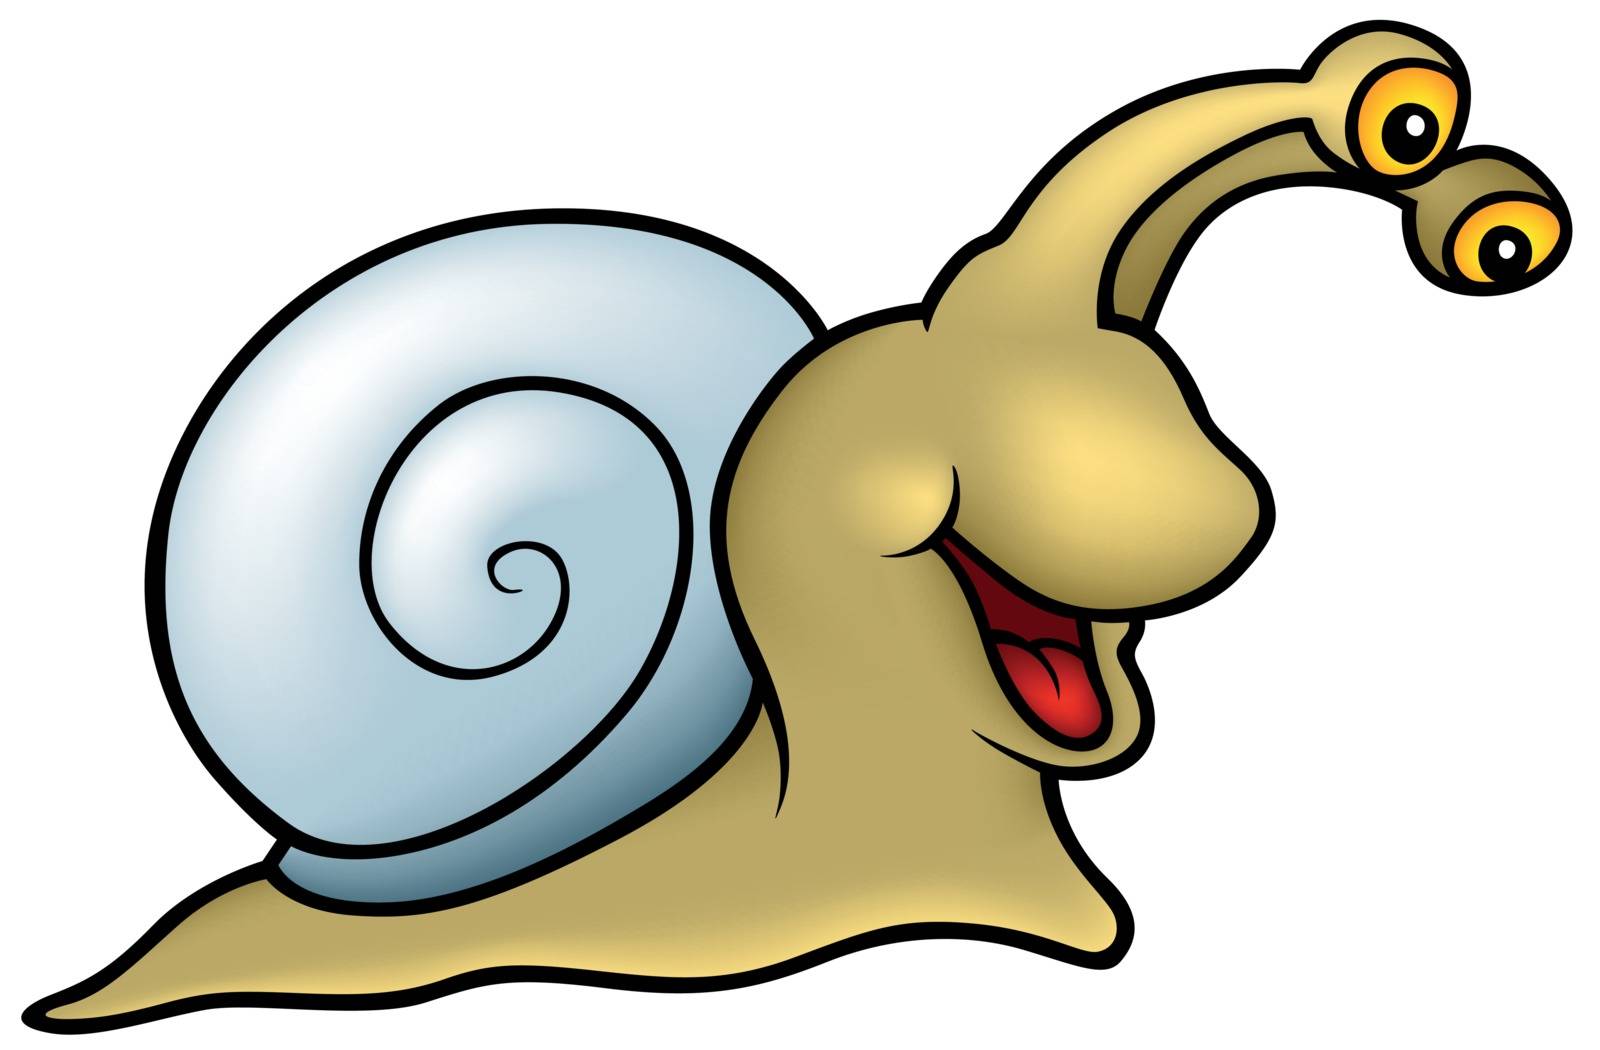 Cheerful Snail by illustratorCZ